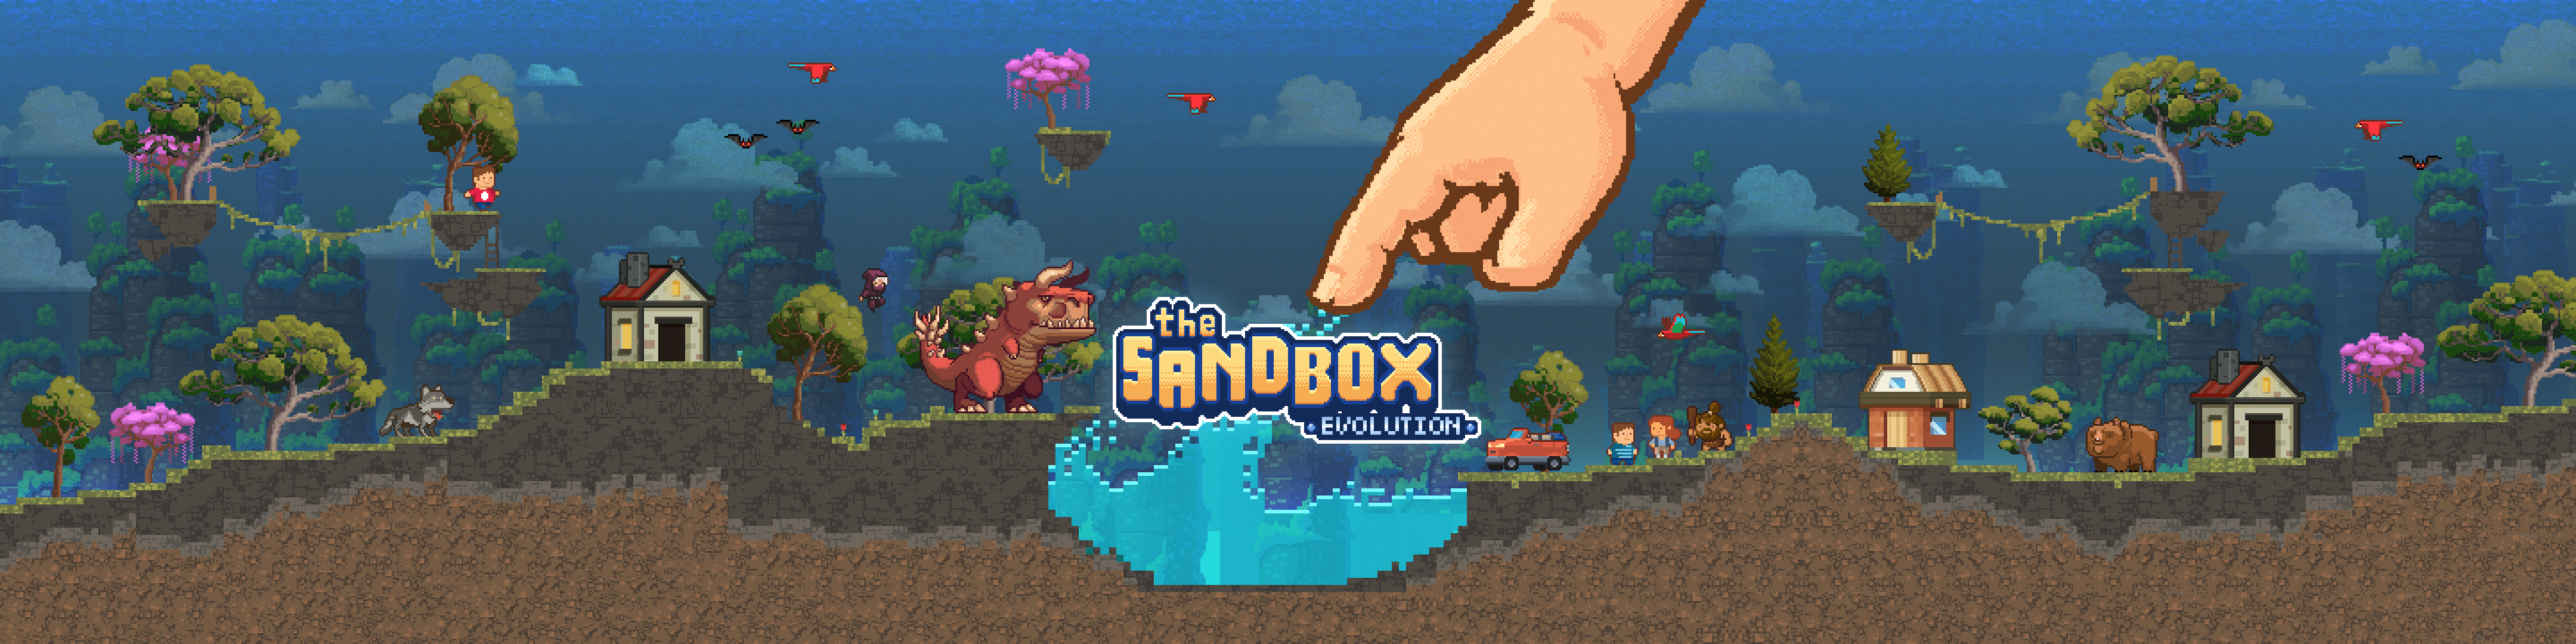 The Sandbox Evolution Overview Apple App Store Us - roblox sandbox glitch